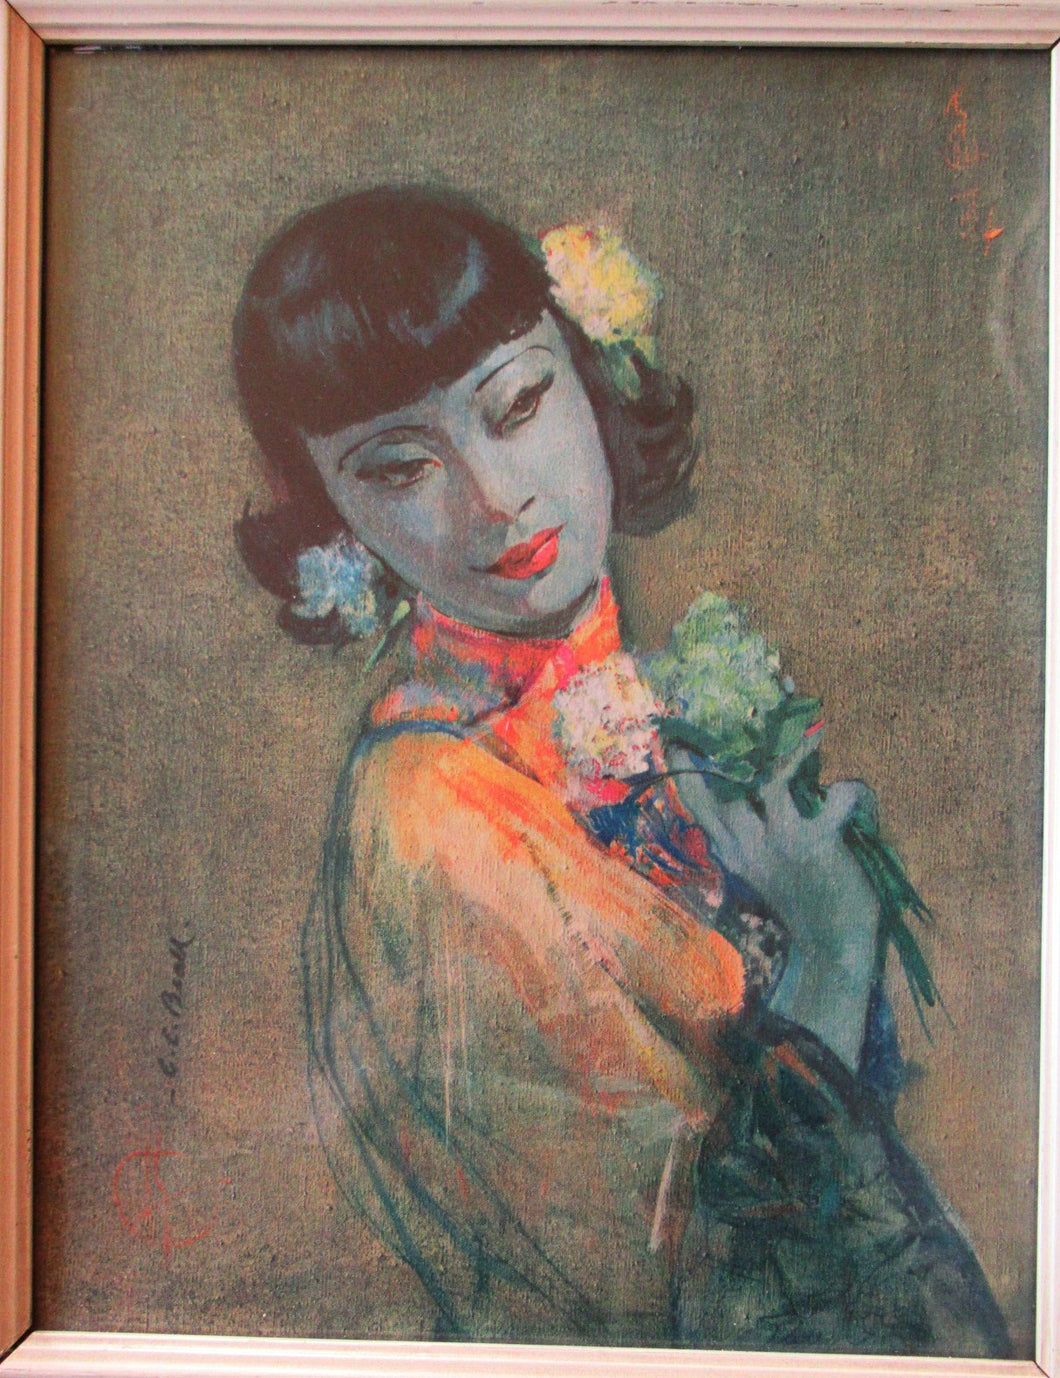 cc beall Japanese Girls Bunch of Flowers Vintage Print 